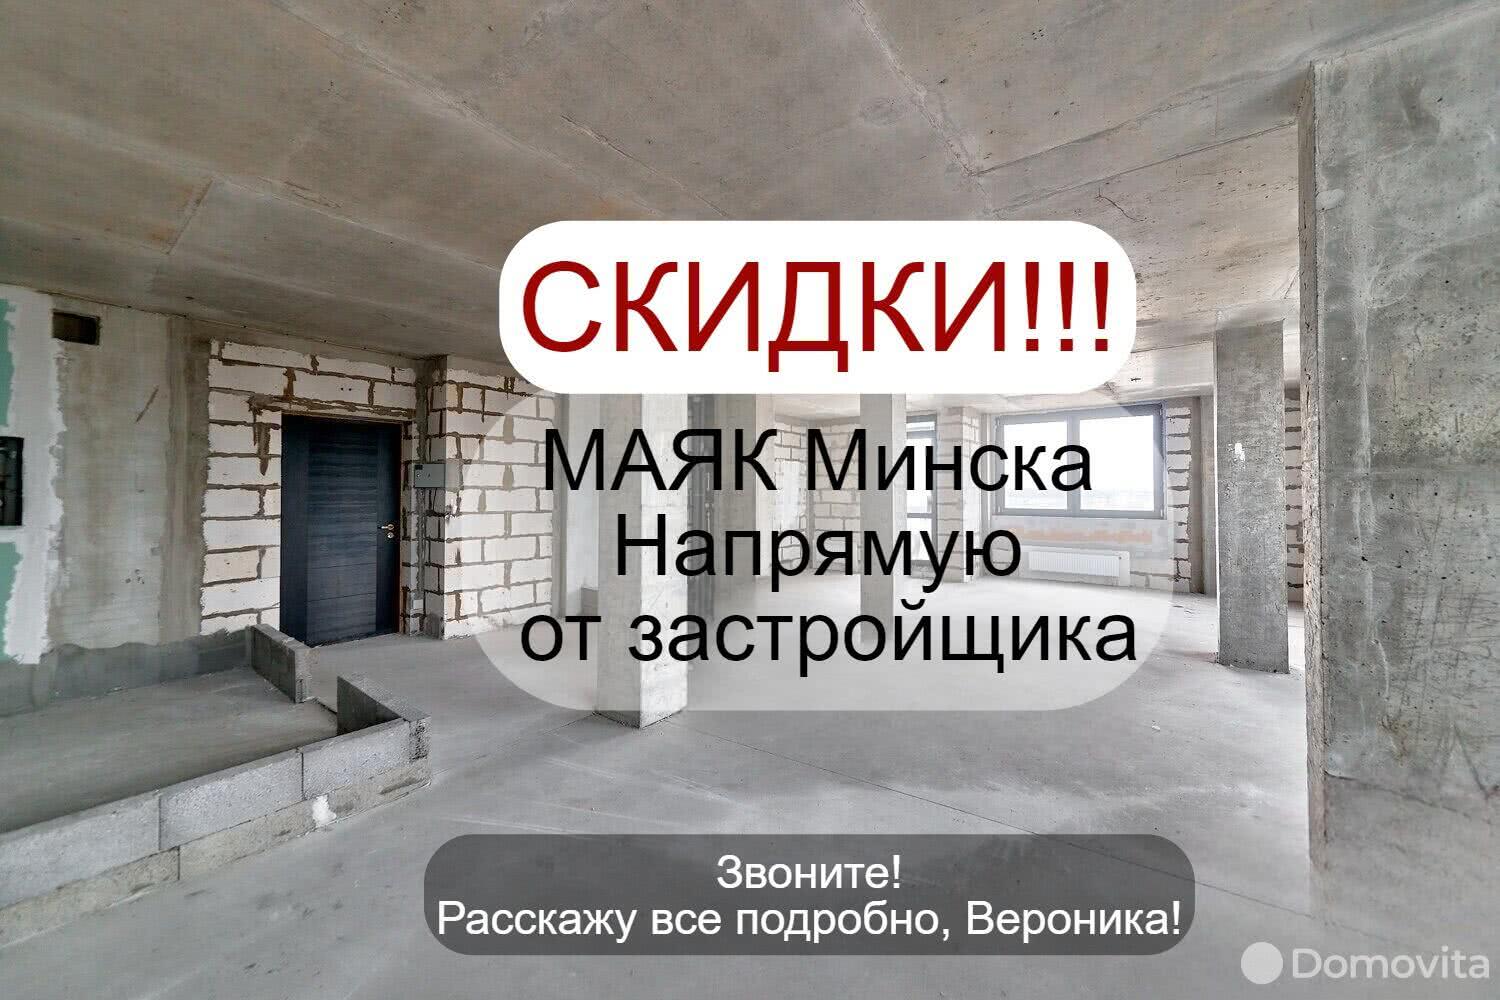 квартира, Минск, ул. Петра Мстиславца, д. 12, стоимость продажи 656 167 р.